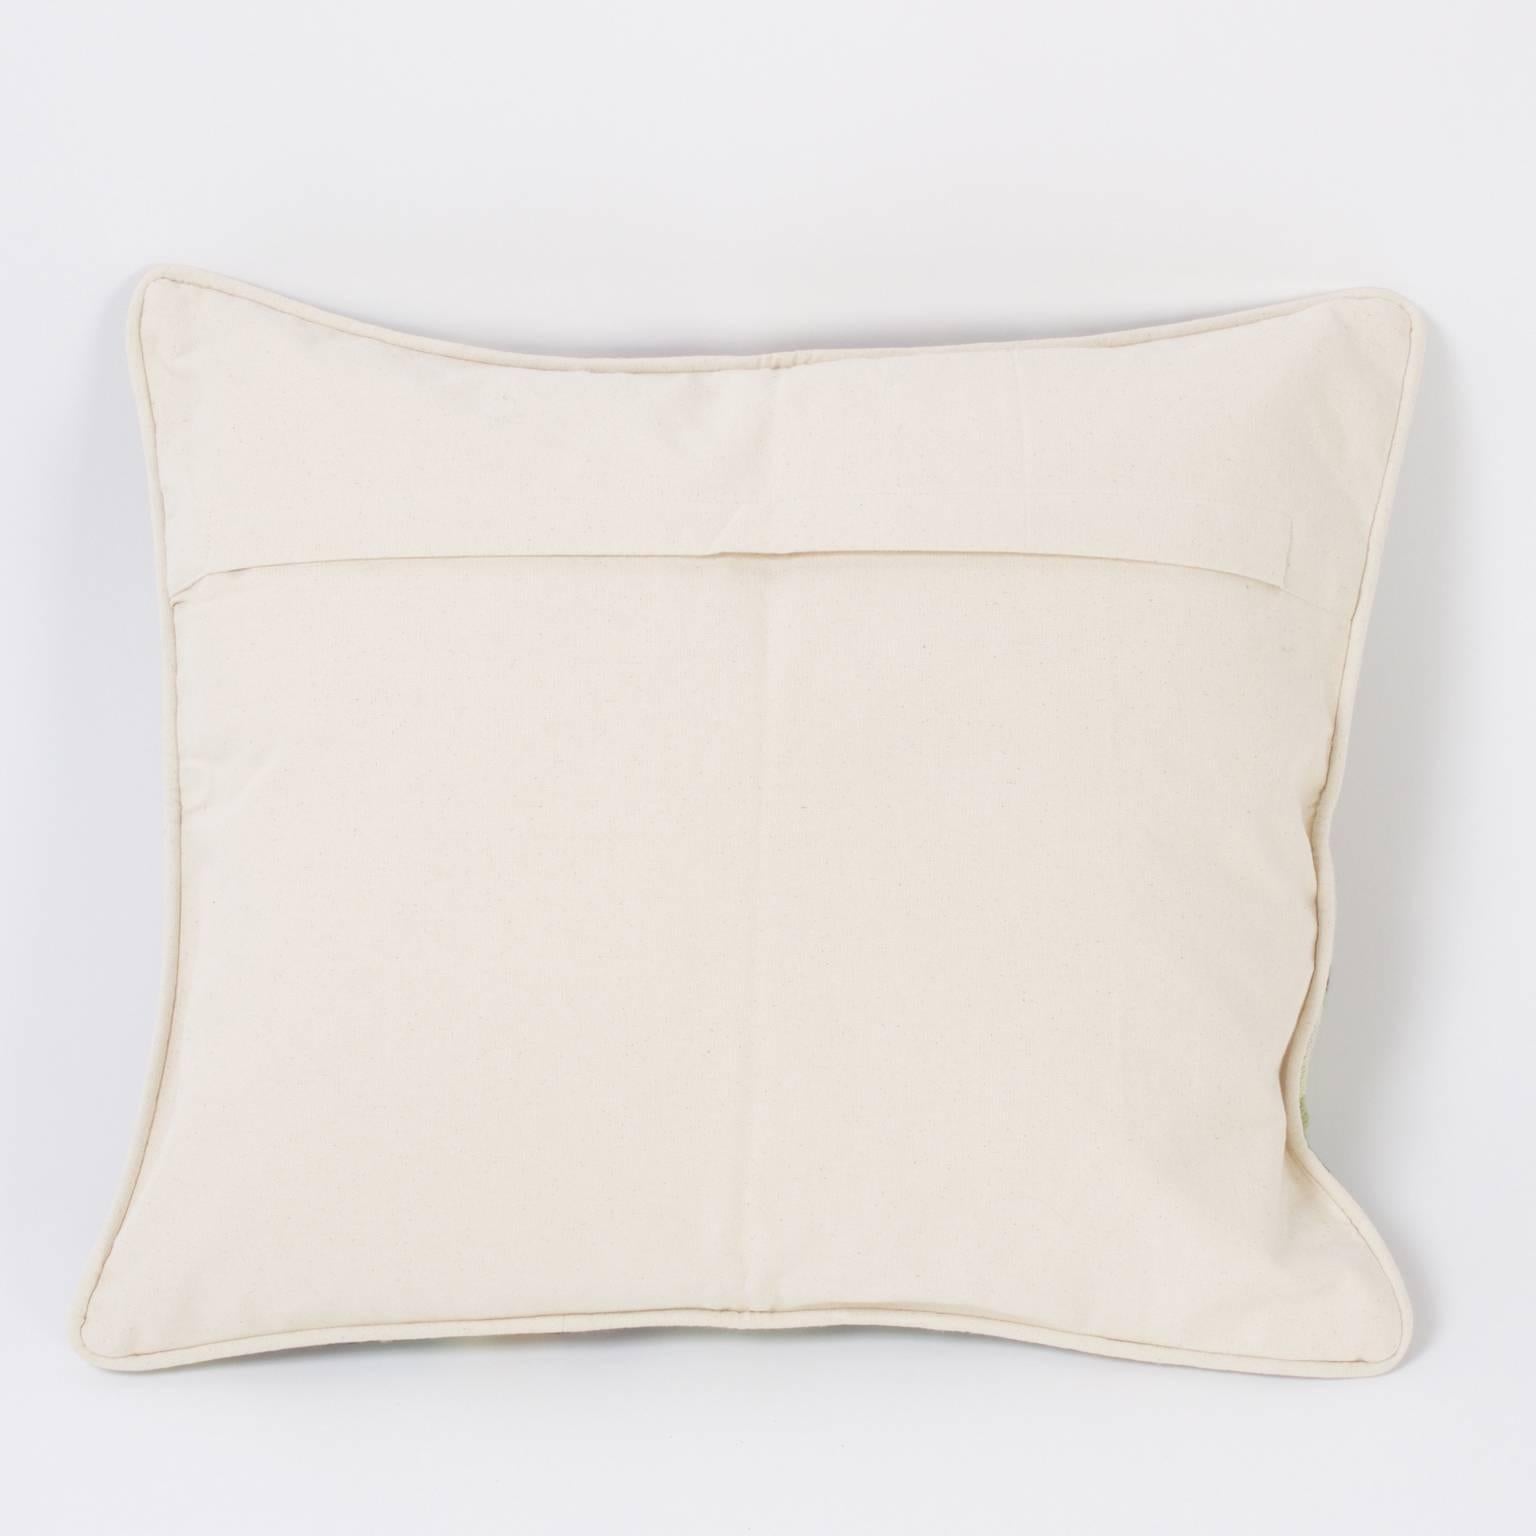 Pair of Indian Crewel Pillows, Priced Individually 2